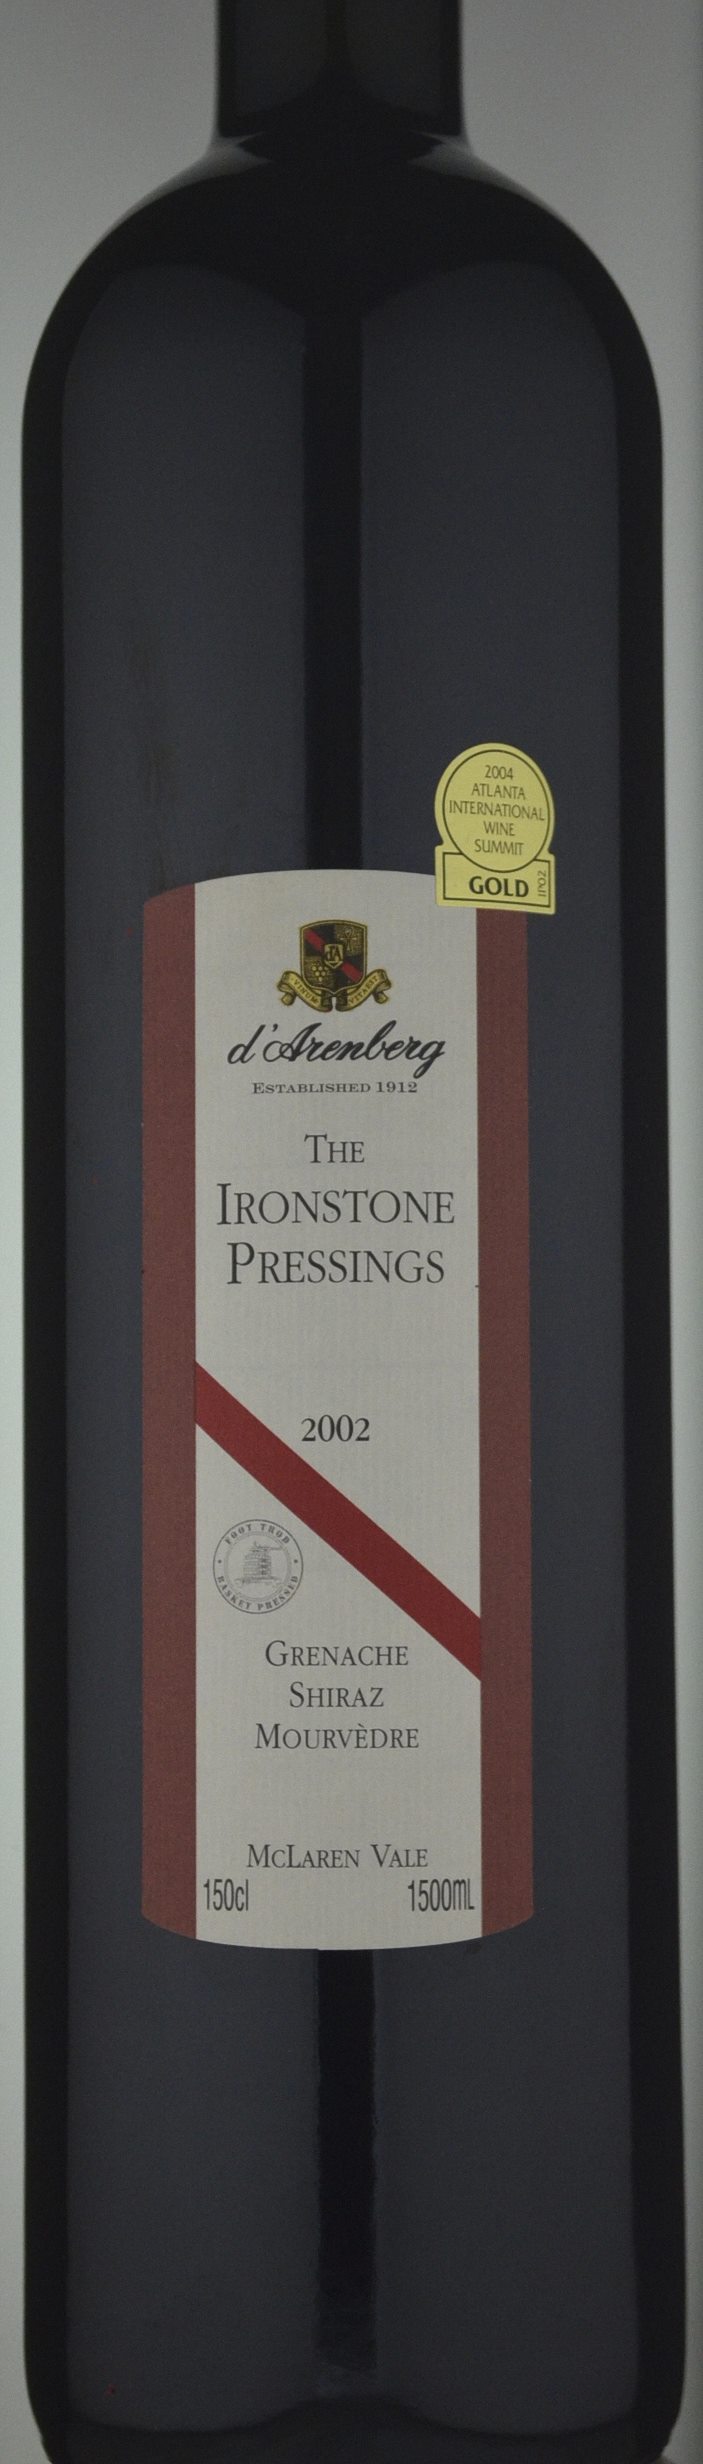 d'Arenberg The Ironstone Pressings Grenache Shiraz Mourvedre 2002